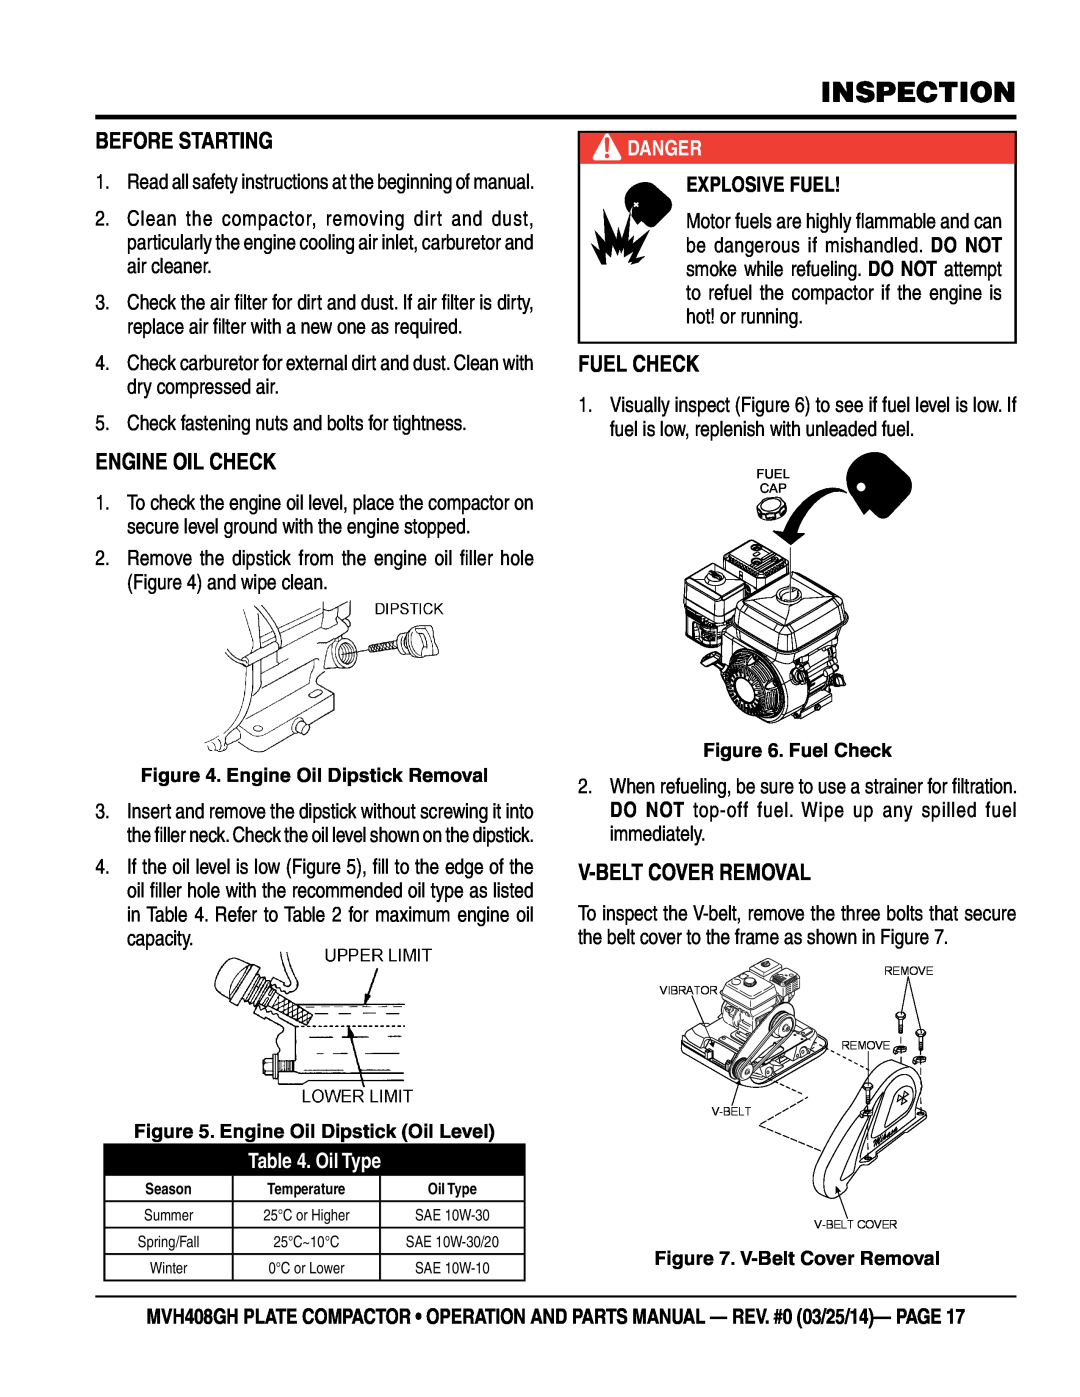 Multiquip MVH408GH manual Inspection, Before Starting, Engine Oil Check, Fuel Check, V-Belt Cover Removal, Oil Type, Danger 